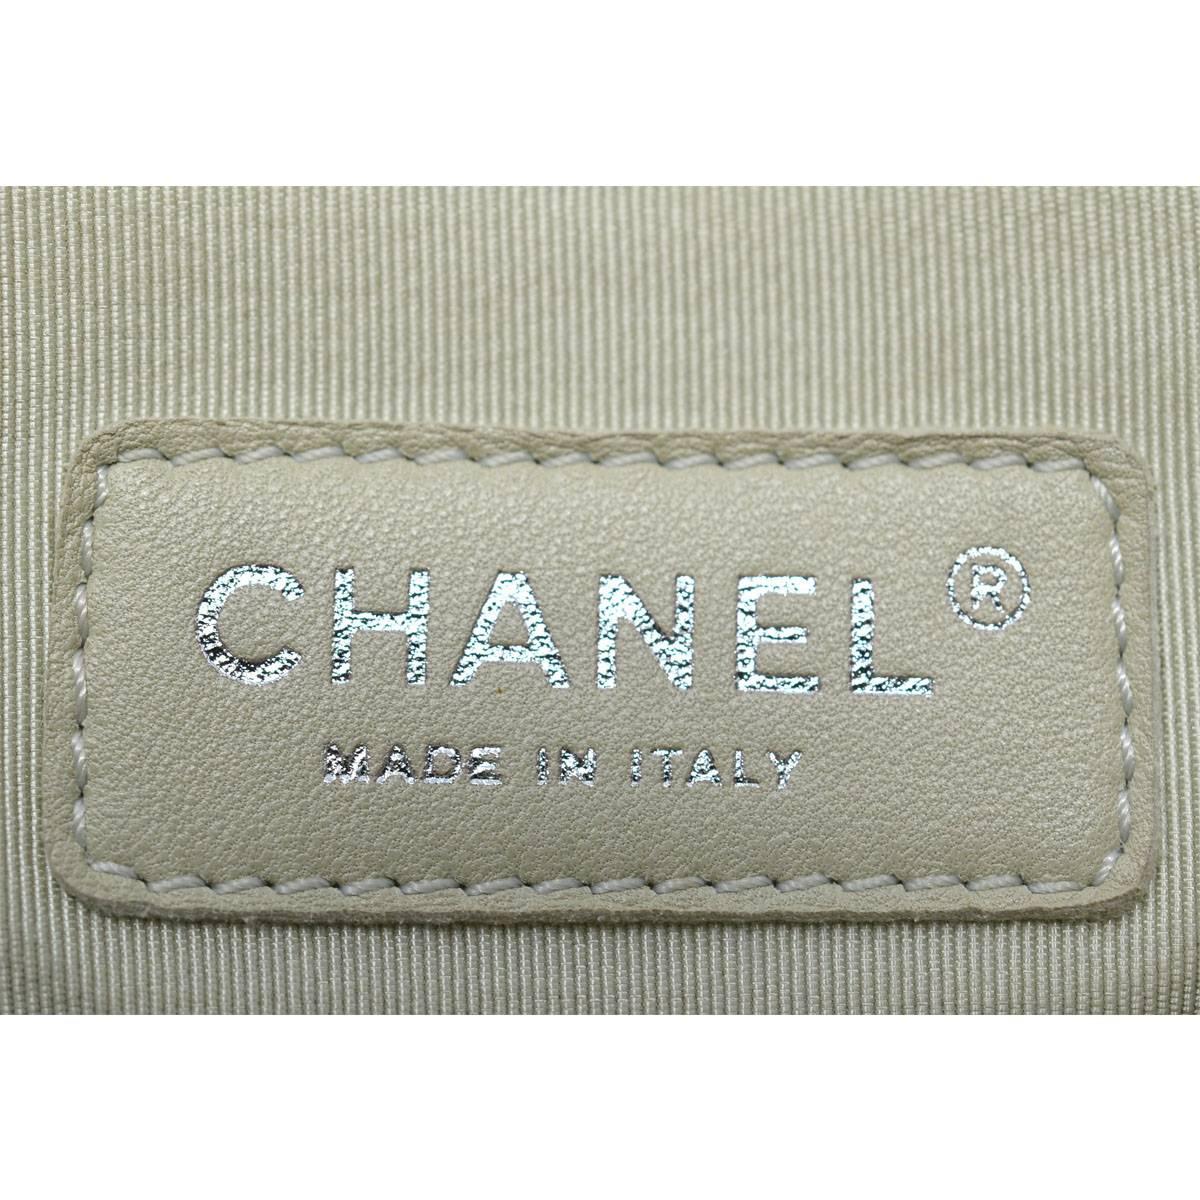 Chanel Black Maxi Silver Chain Around the Handbag Hardware With Card 7